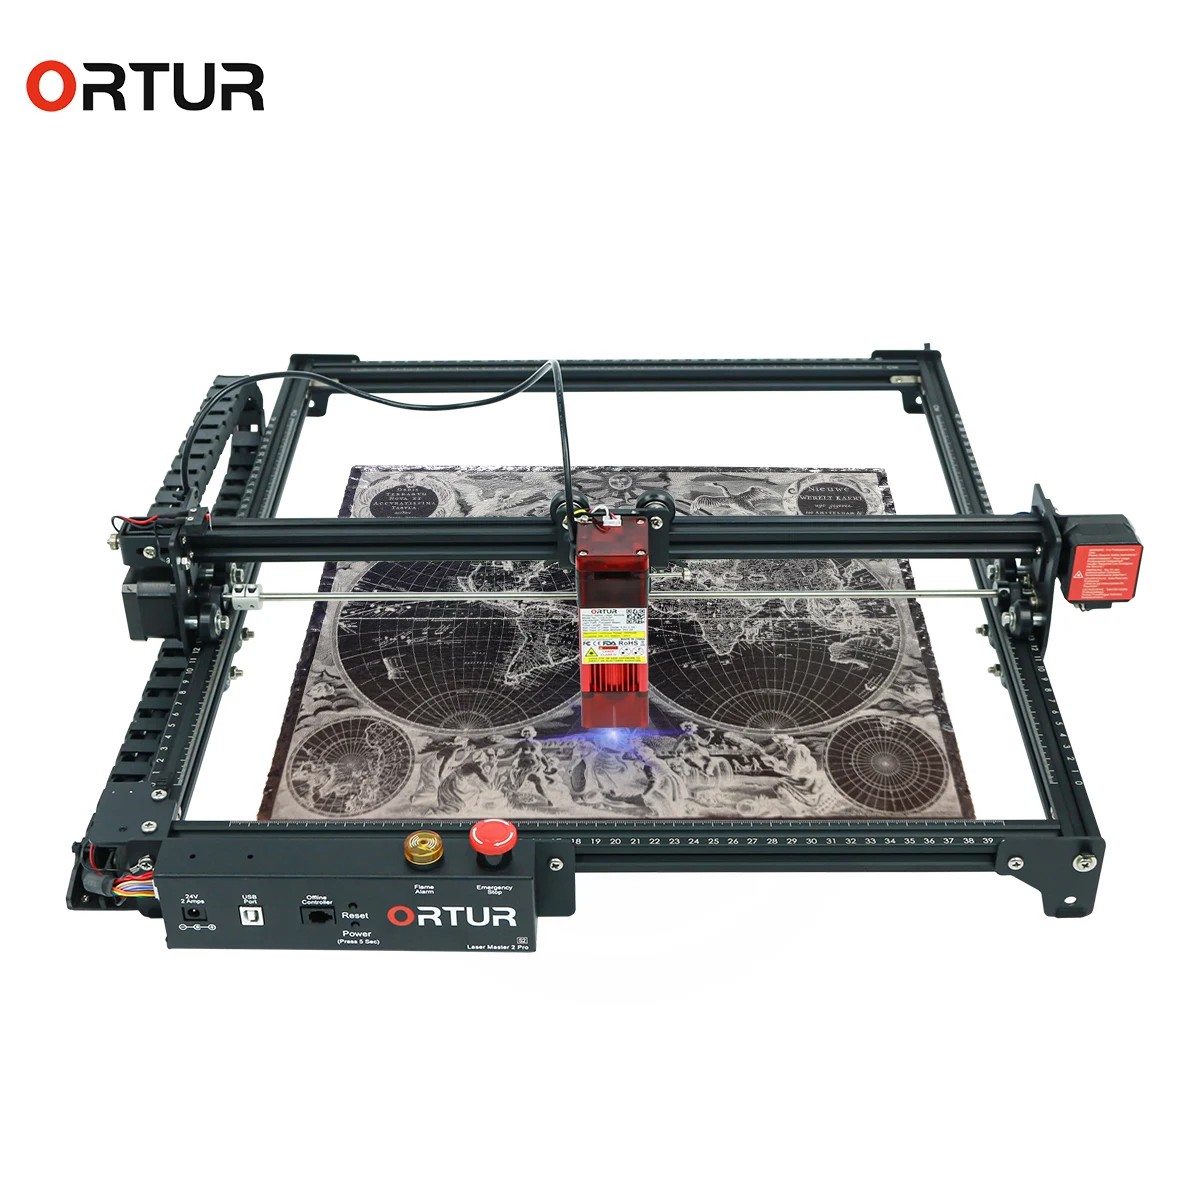 

ORTUR Laser Master pro S2 Laser Engraver CNC Fixed Focus with 32-bit Motherboard LaserGRBL(LightBurn) 40x40cm Engraving Area